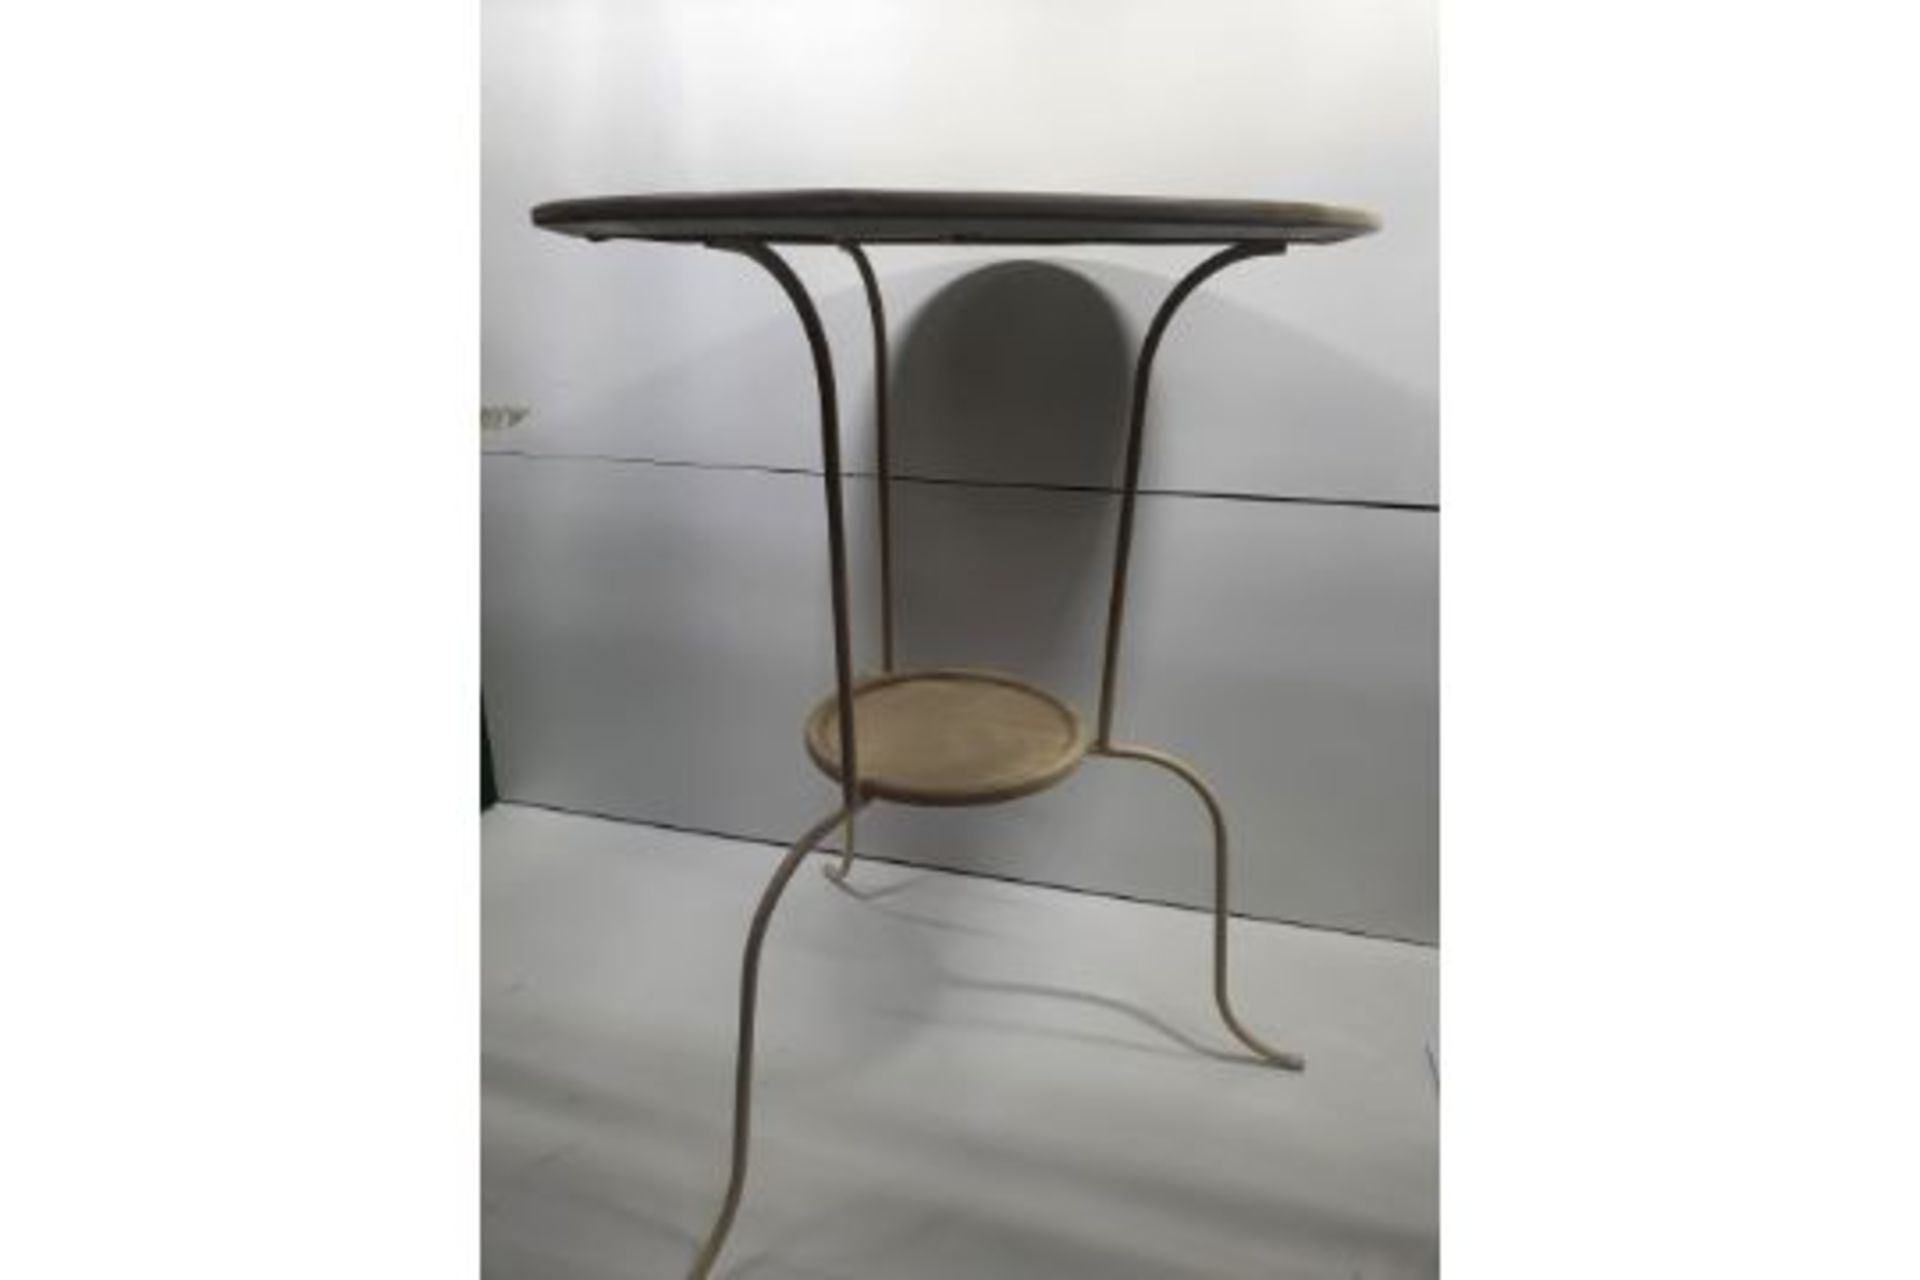 Metal Bistro Table with Undershelf - Image 2 of 2